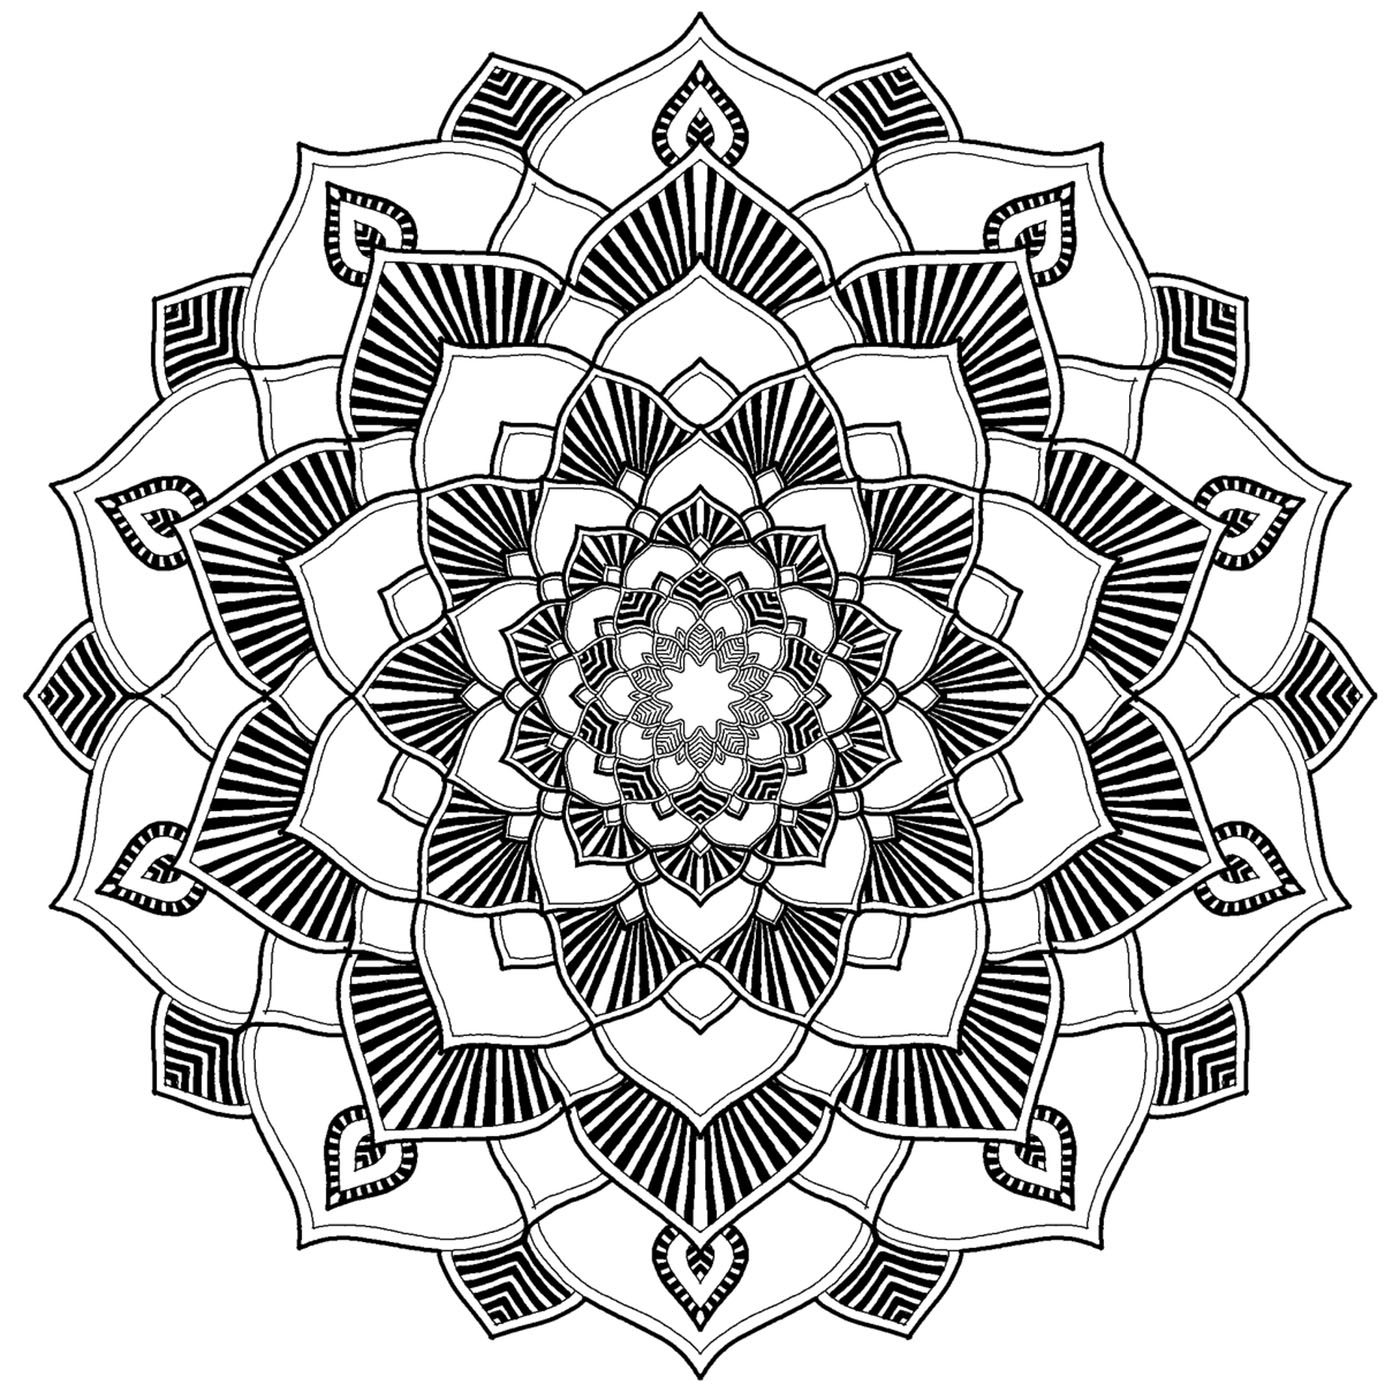 Soothing Mandala with harmonious patterns - Mandalas Adult Coloring Pages